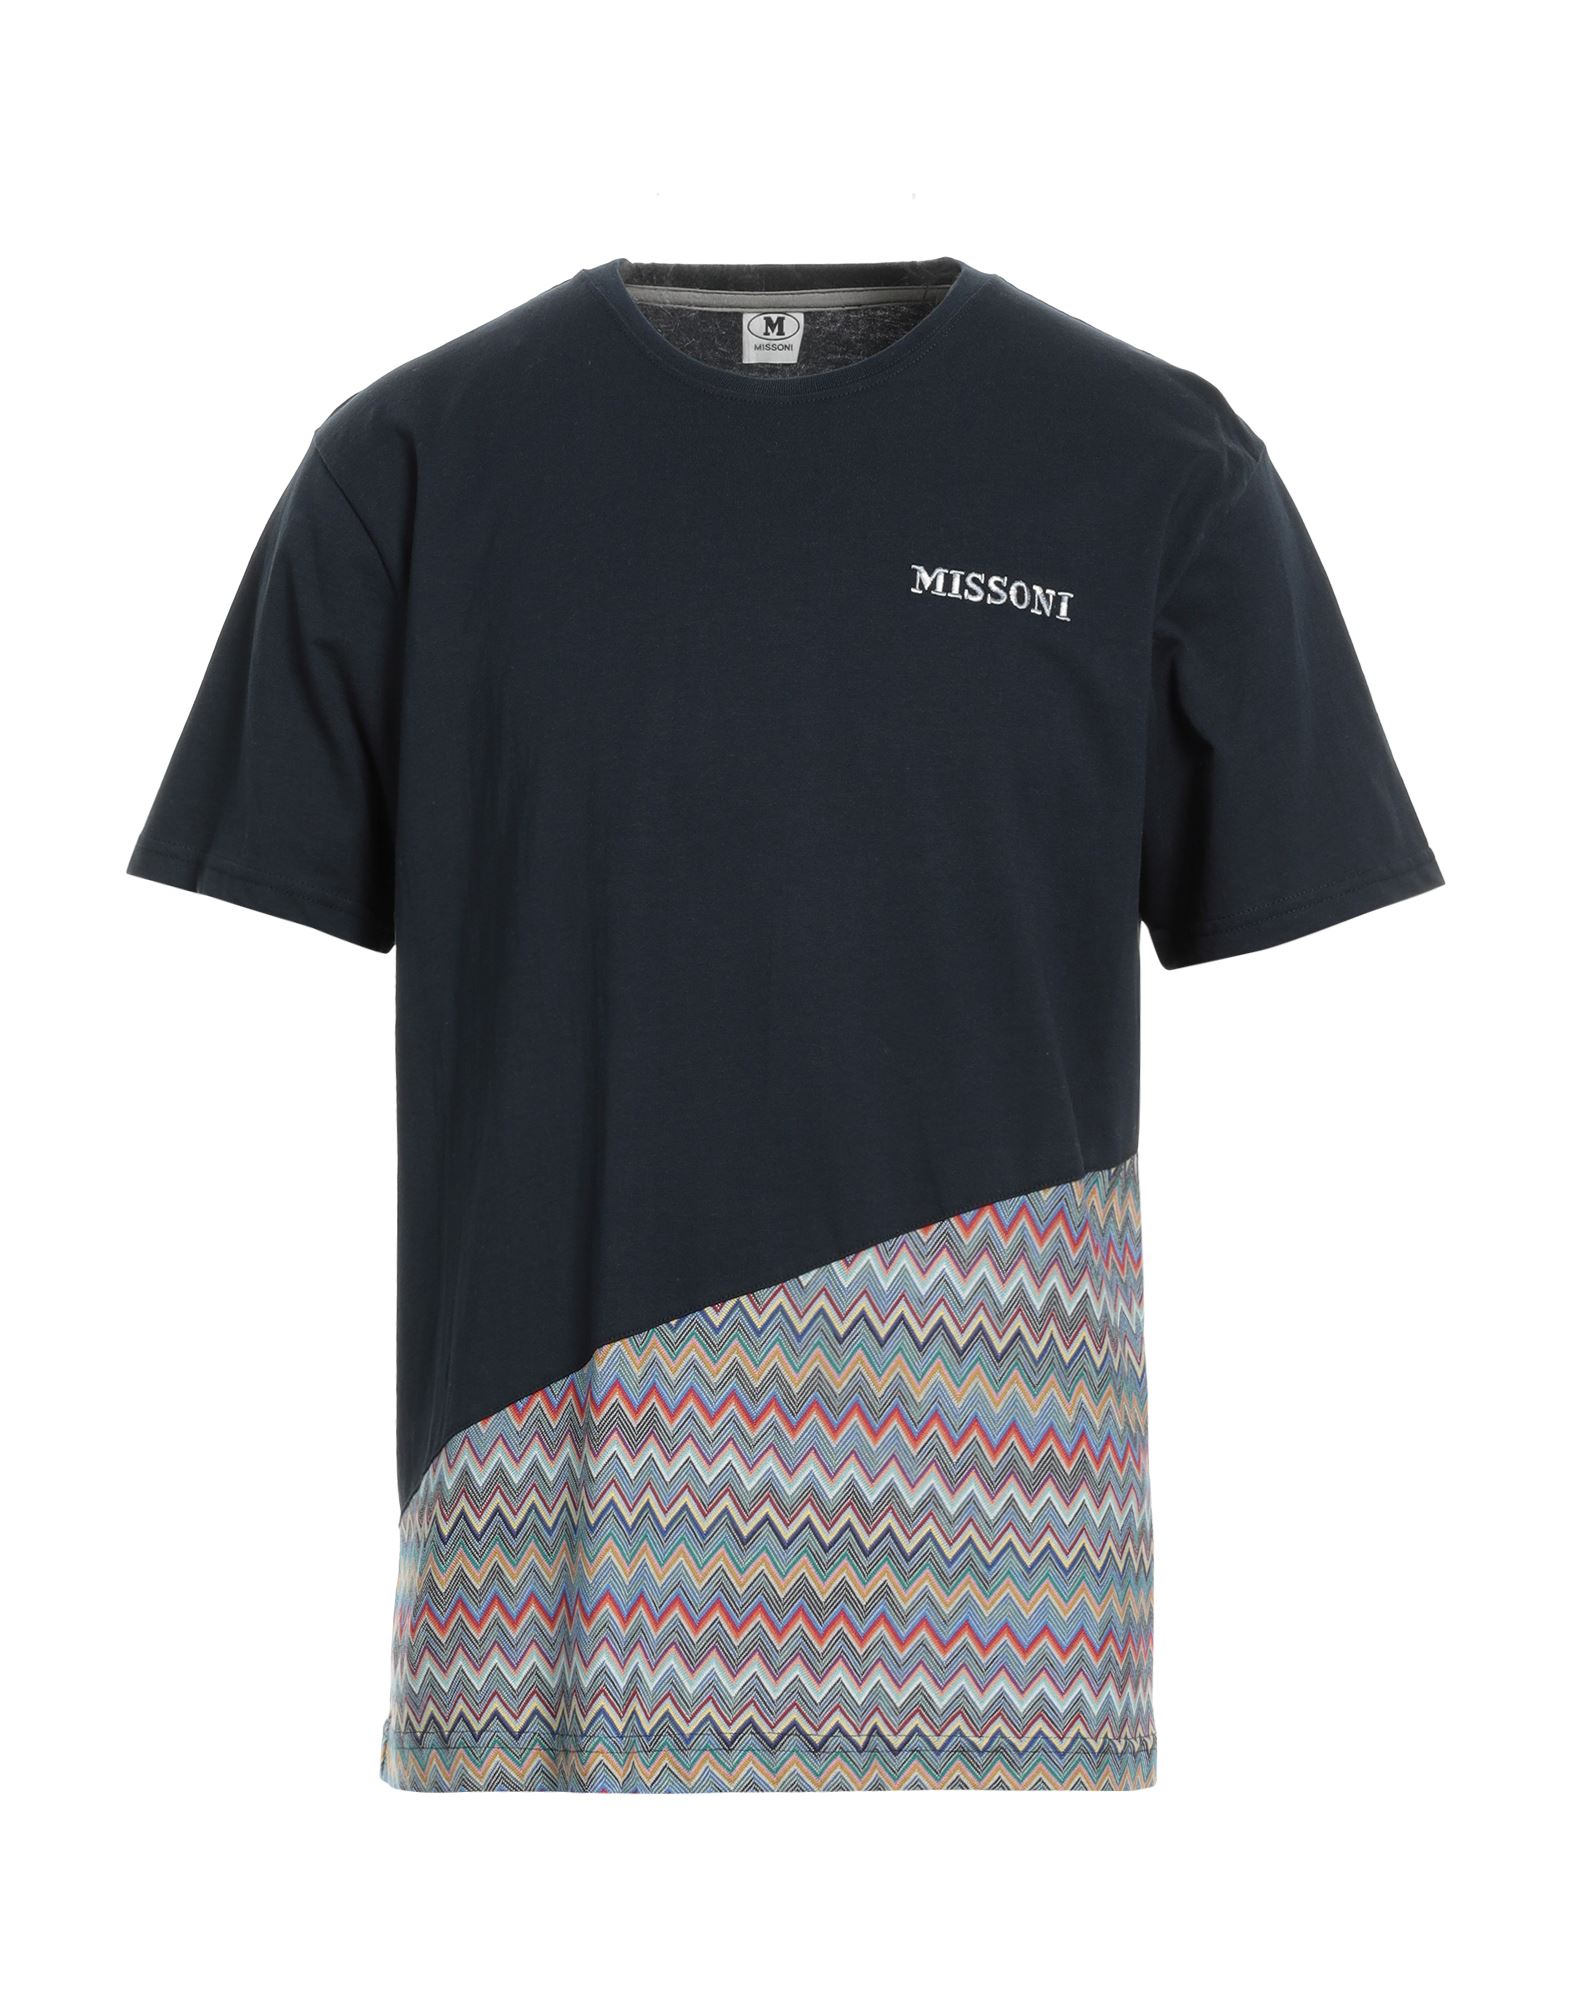 M MISSONI T-shirts Herren Nachtblau von M MISSONI